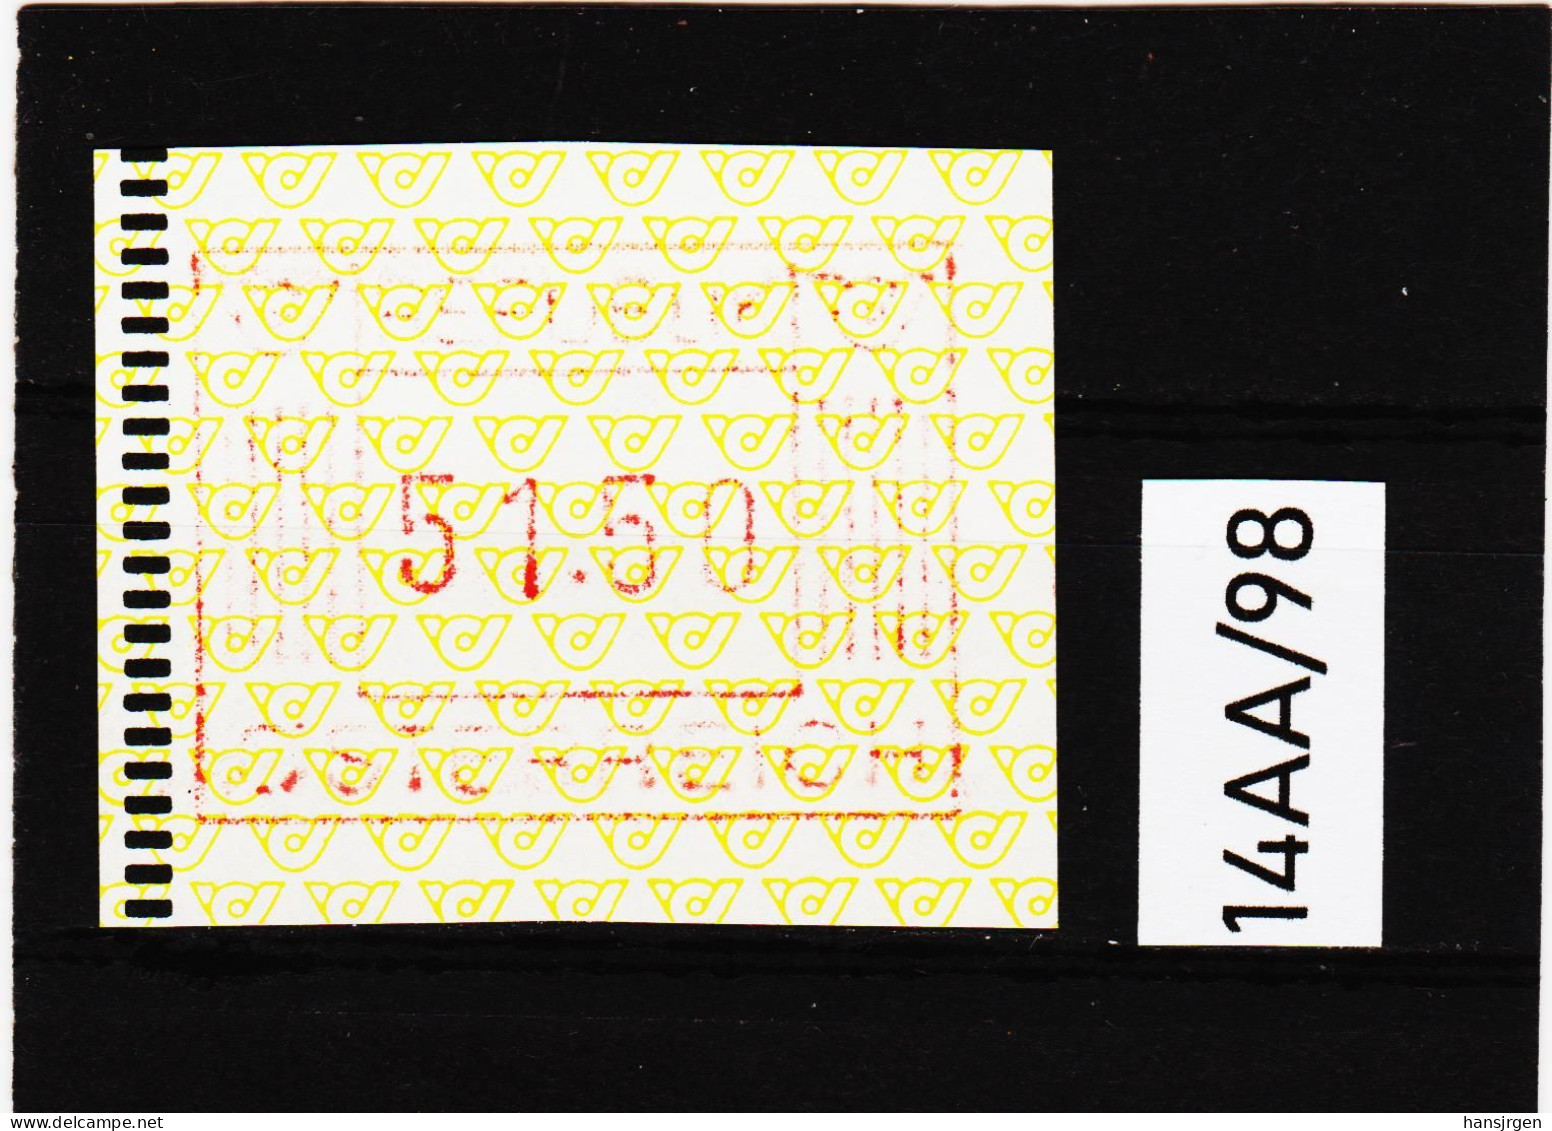 14AA/98  ÖSTERREICH 1983 AUTOMATENMARKEN 1. AUSGABE  51,50 SCHILLING   ** Postfrisch - Timbres De Distributeurs [ATM]